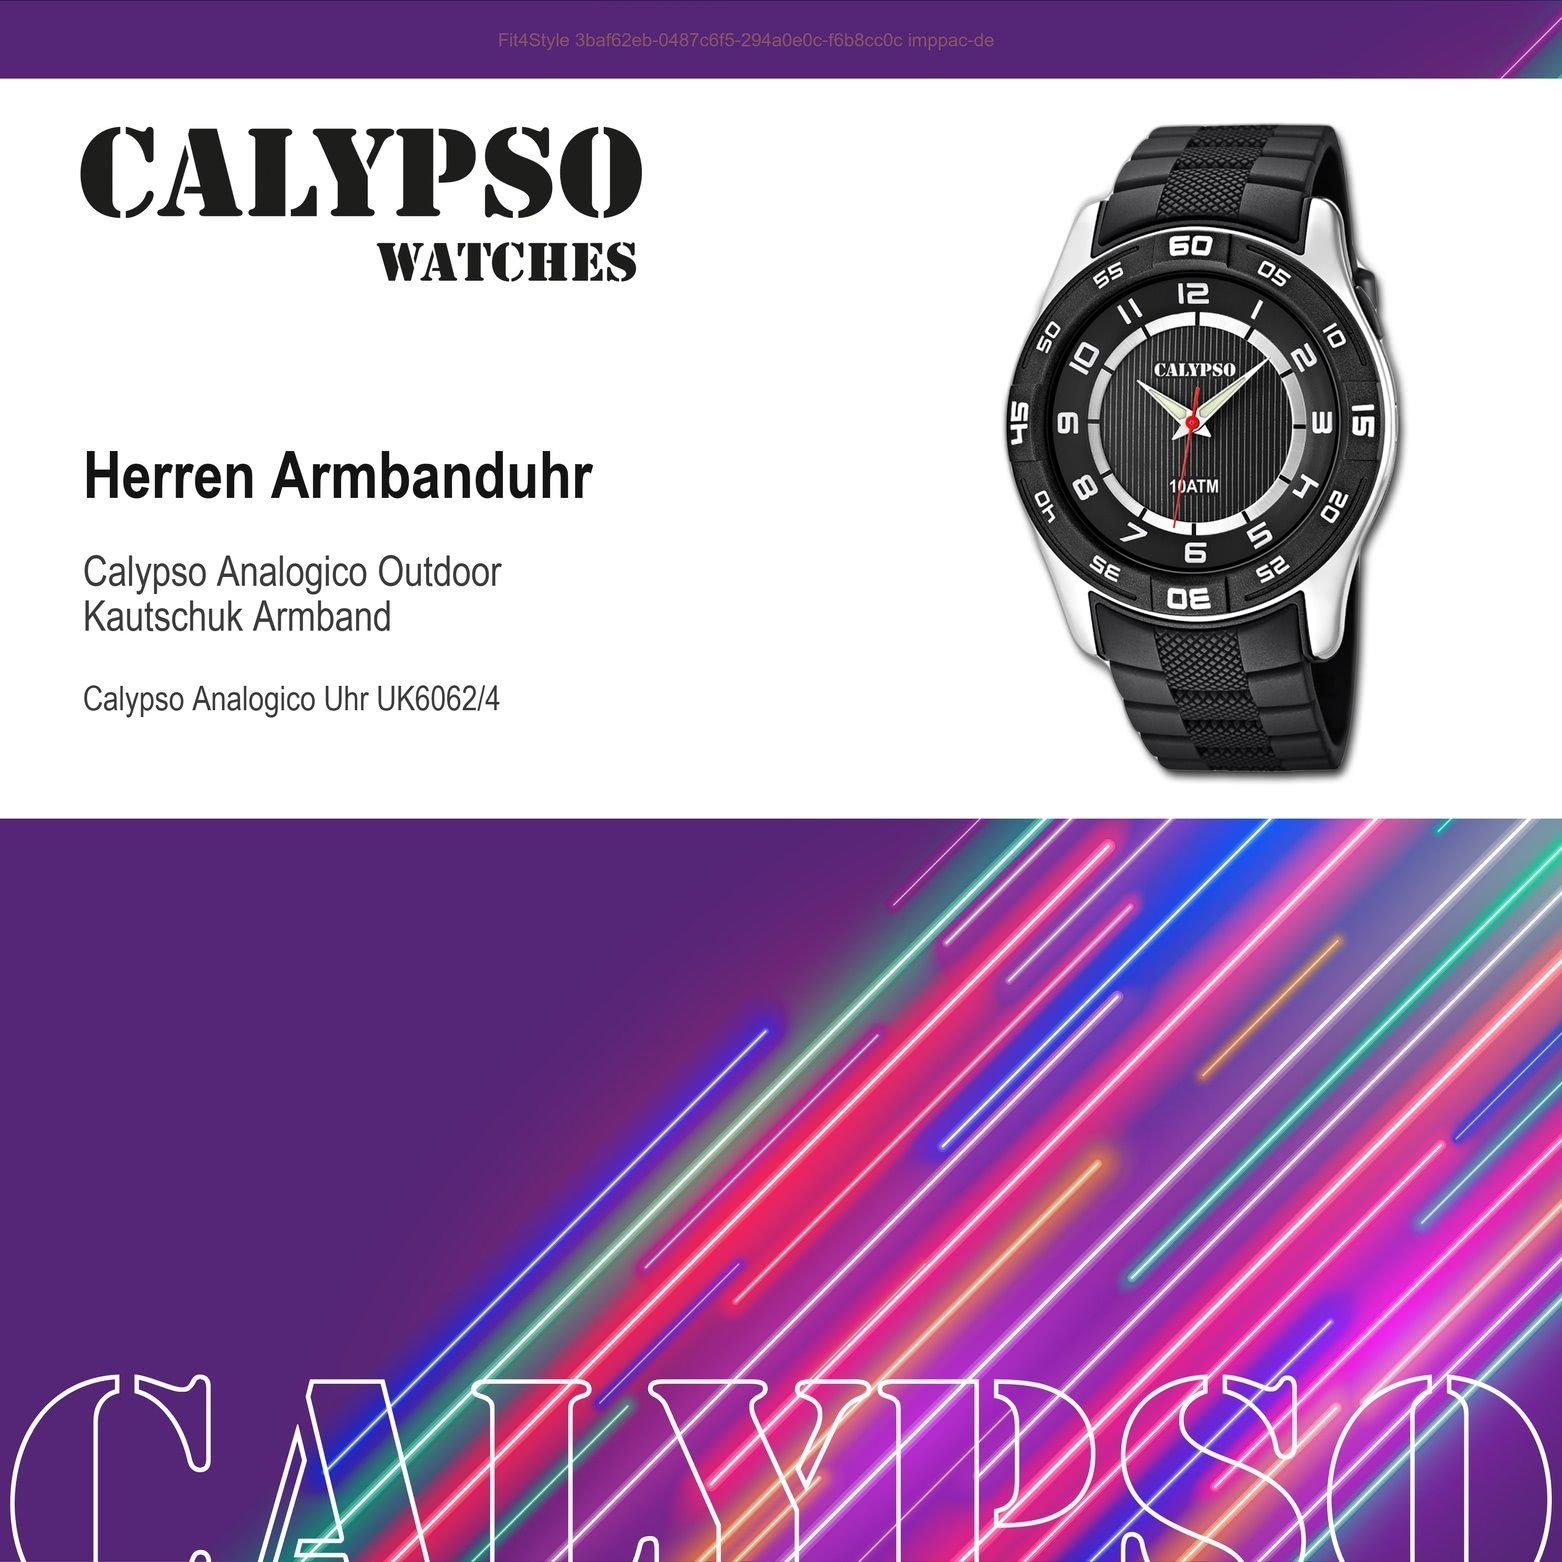 Kautschukarmband WATCHES Outdoor Herren rund, Quarzuhr Calypso K6062/4, CALYPSO schwarz, Armbanduhr Herren Uhr